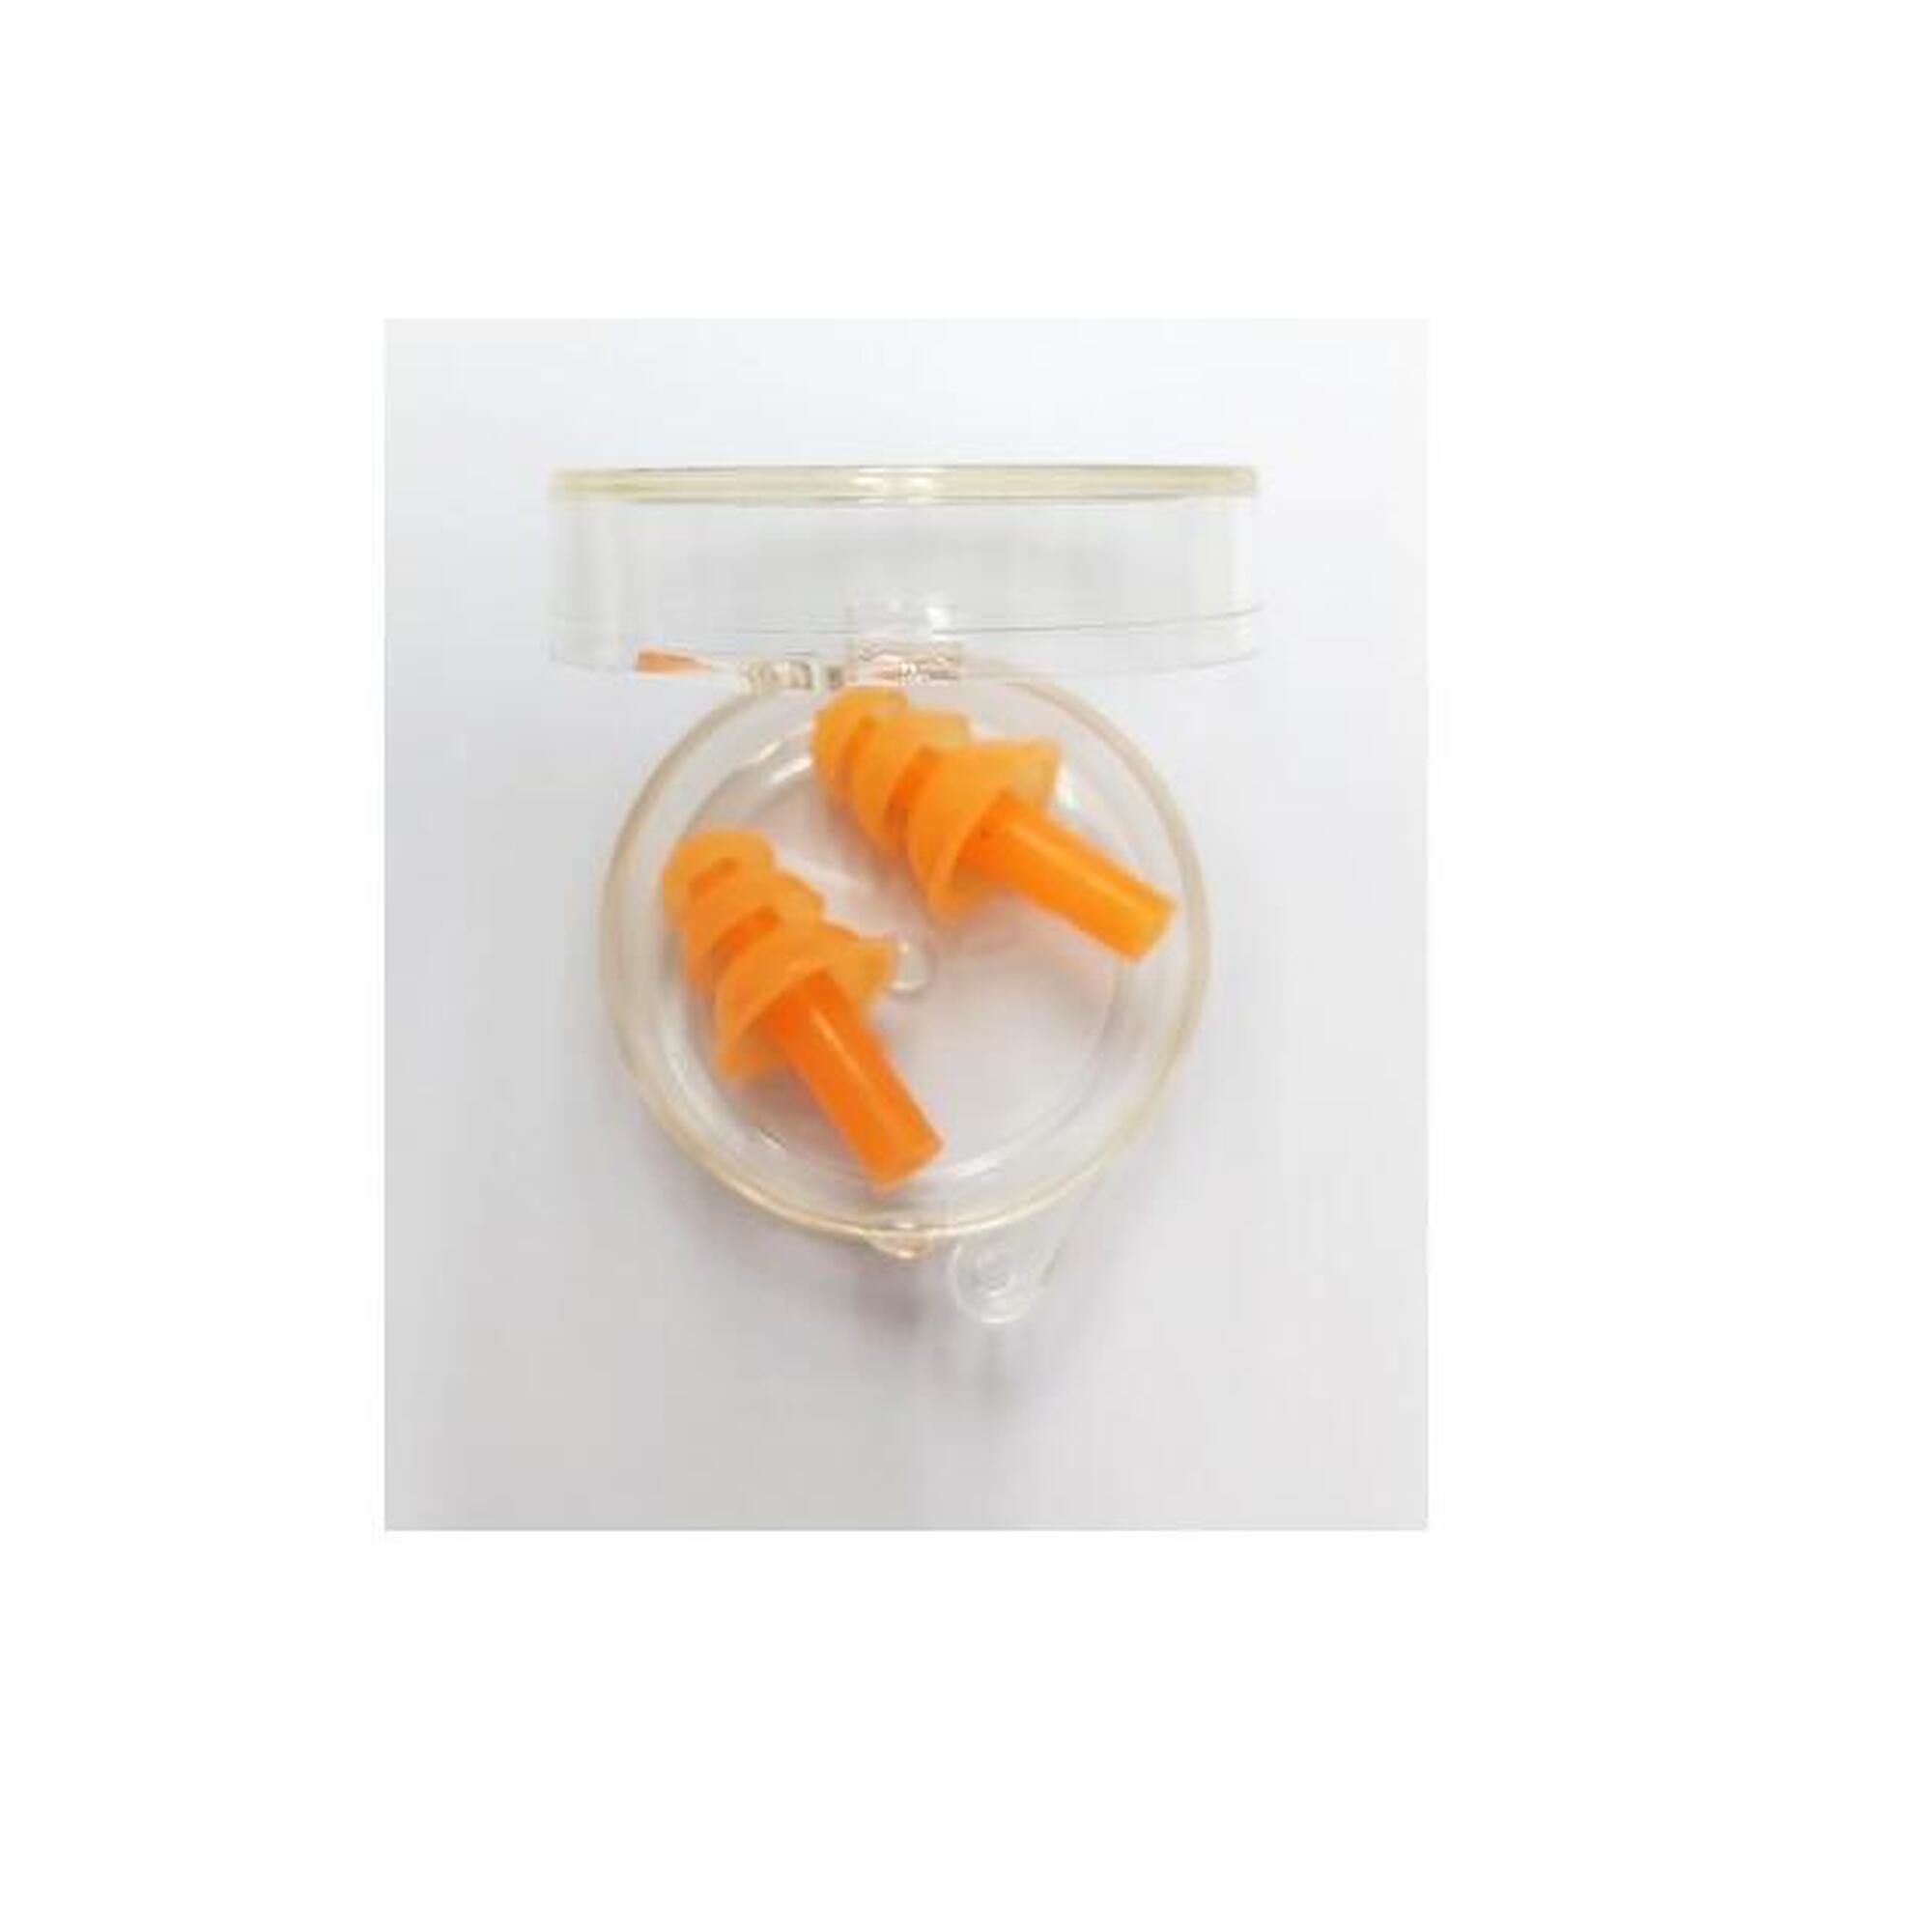 MS-9058 Silicone Swimming Ear Plugs (One Pair) - Orange